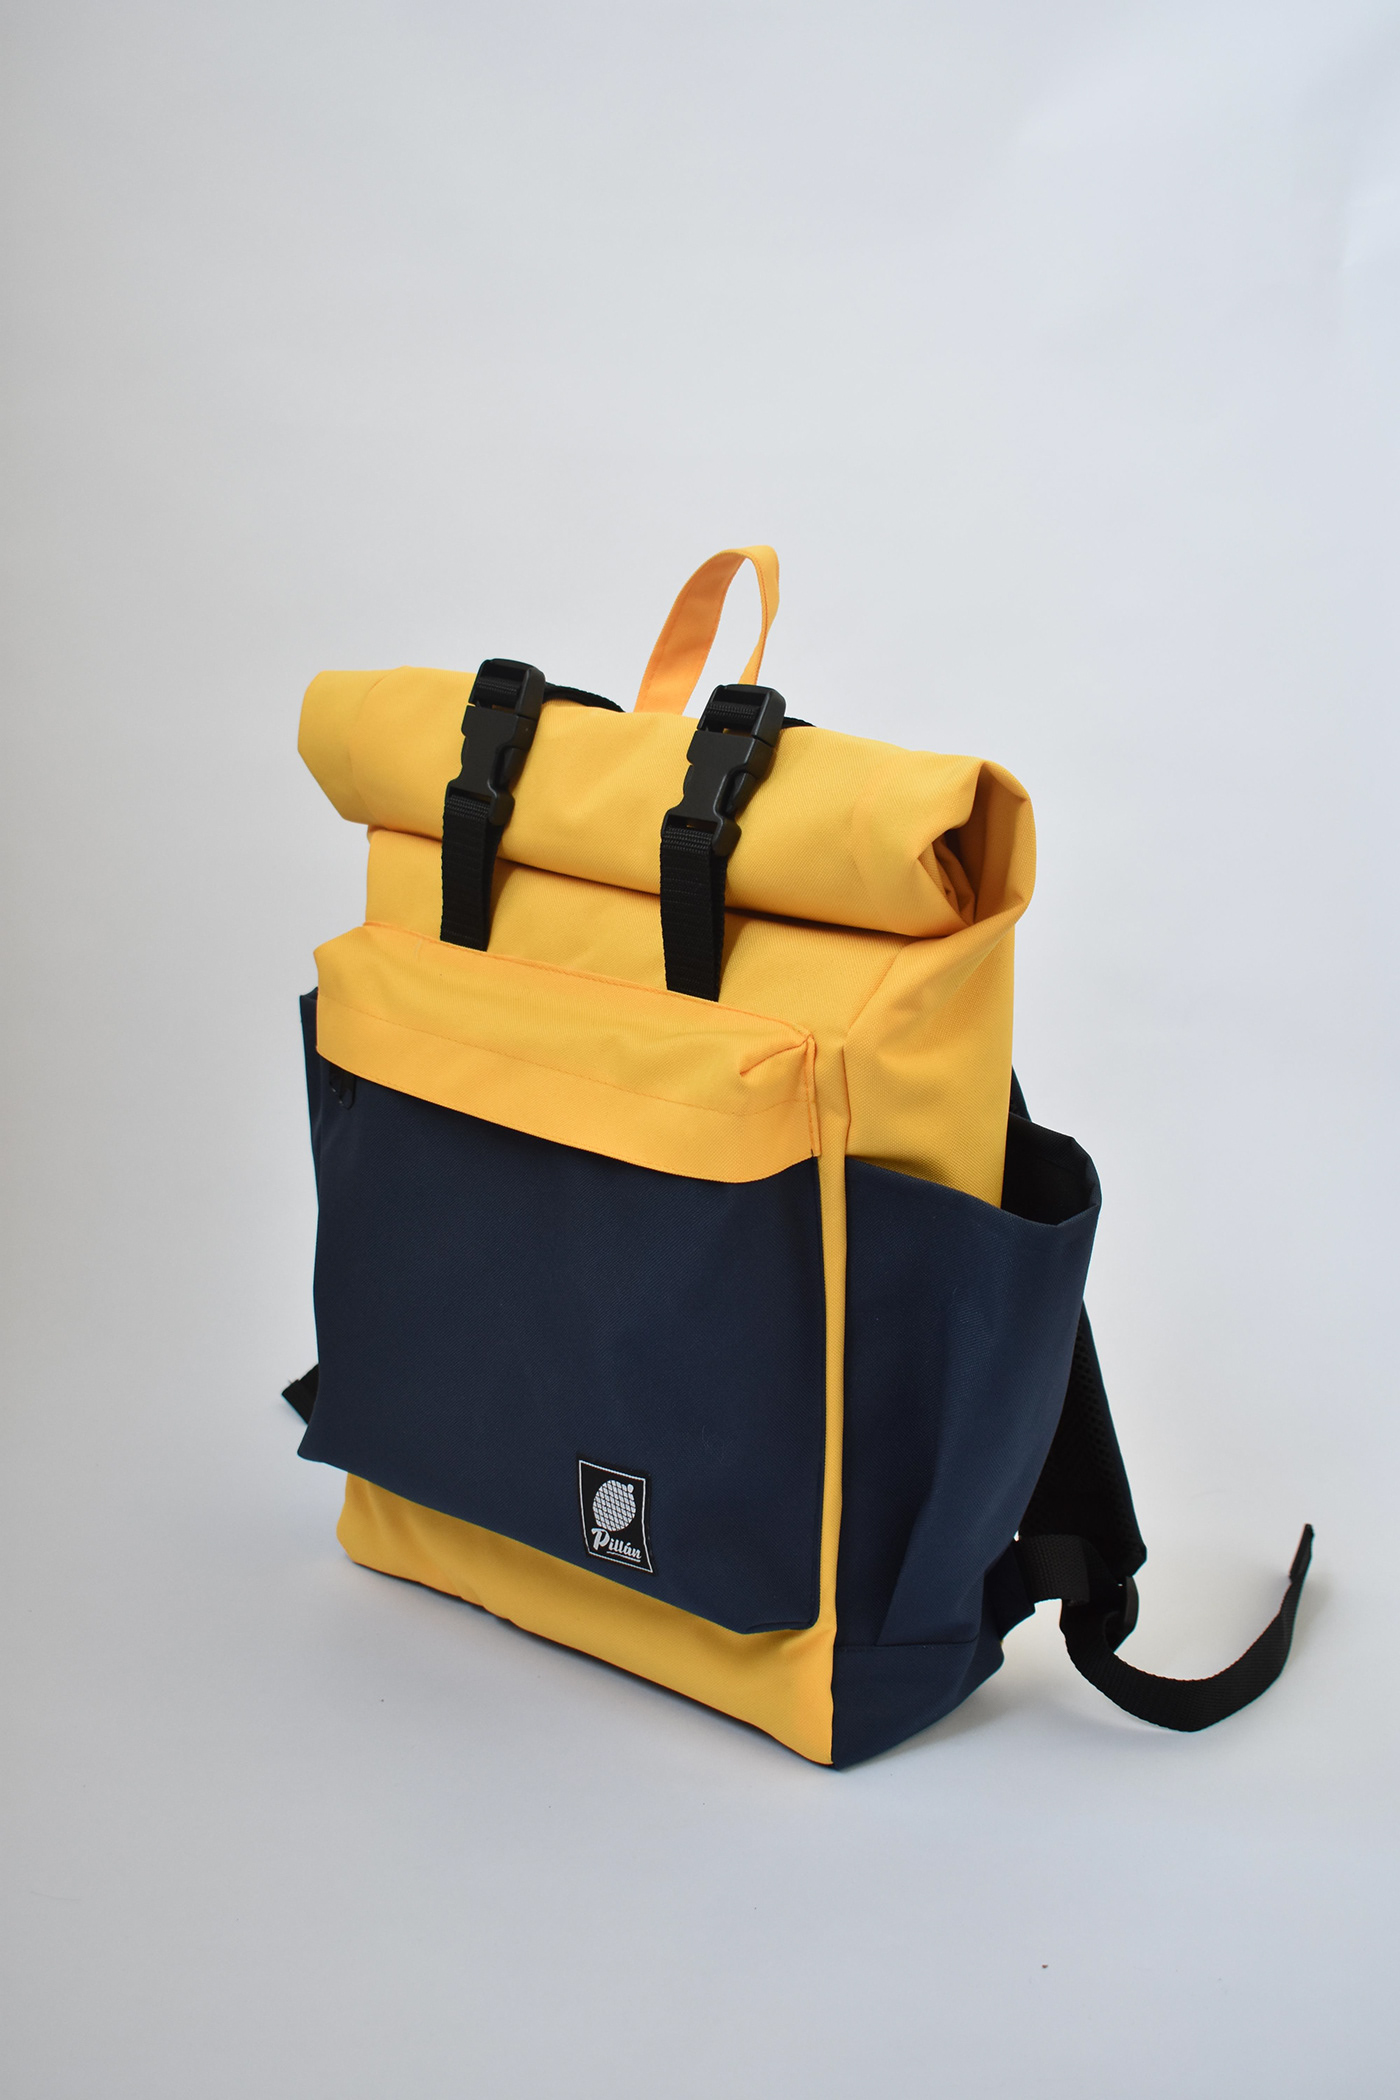 accesorios backpack design diseño mochilas Pillán rolltop